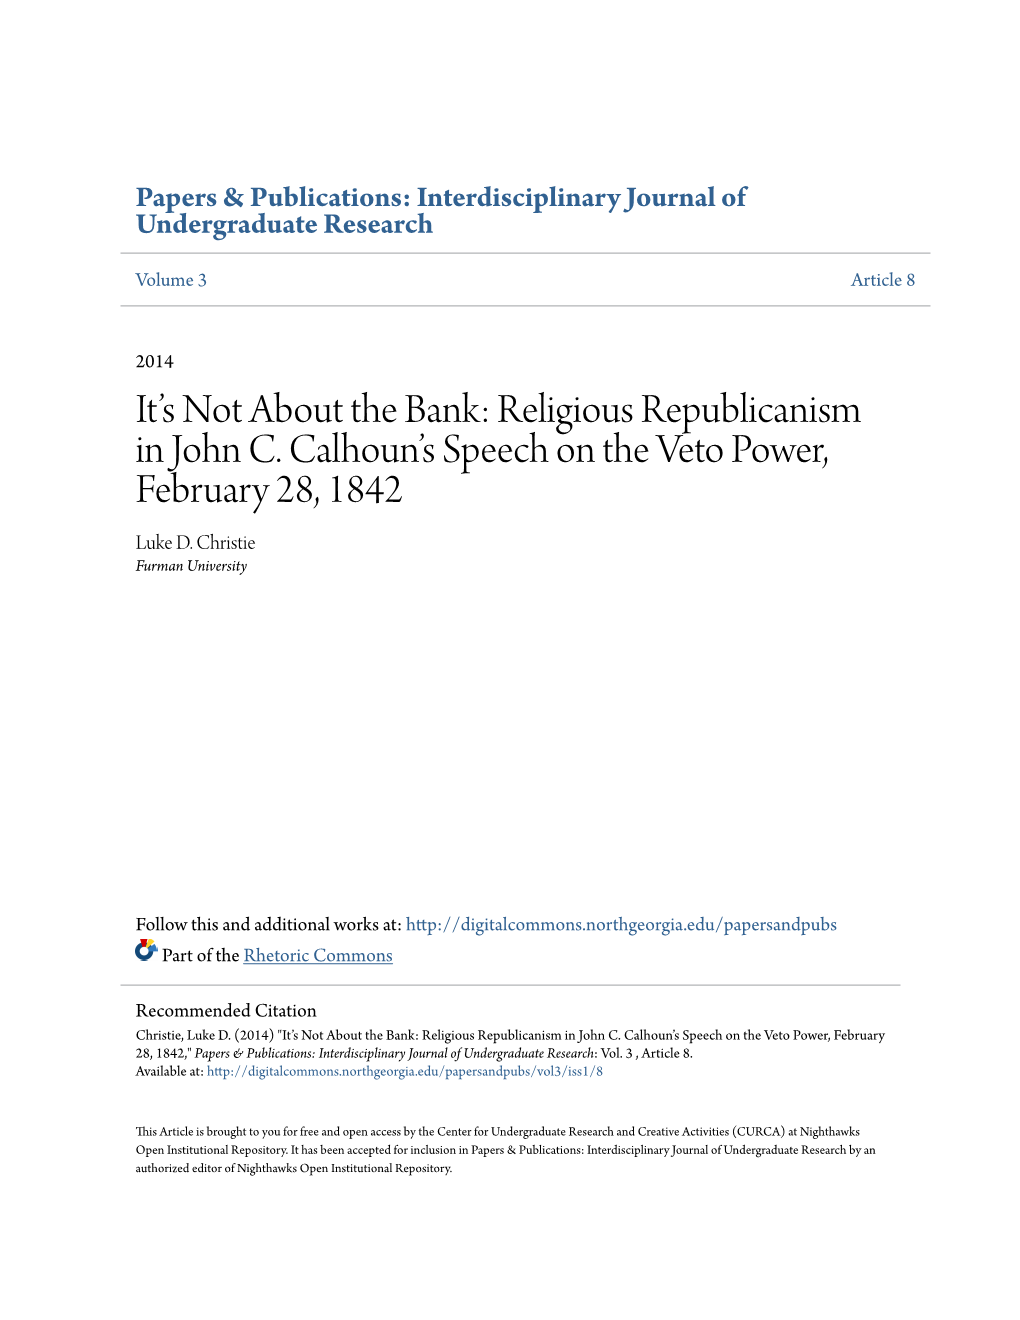 Religious Republicanism in John C. Calhoun's Speech on the Veto